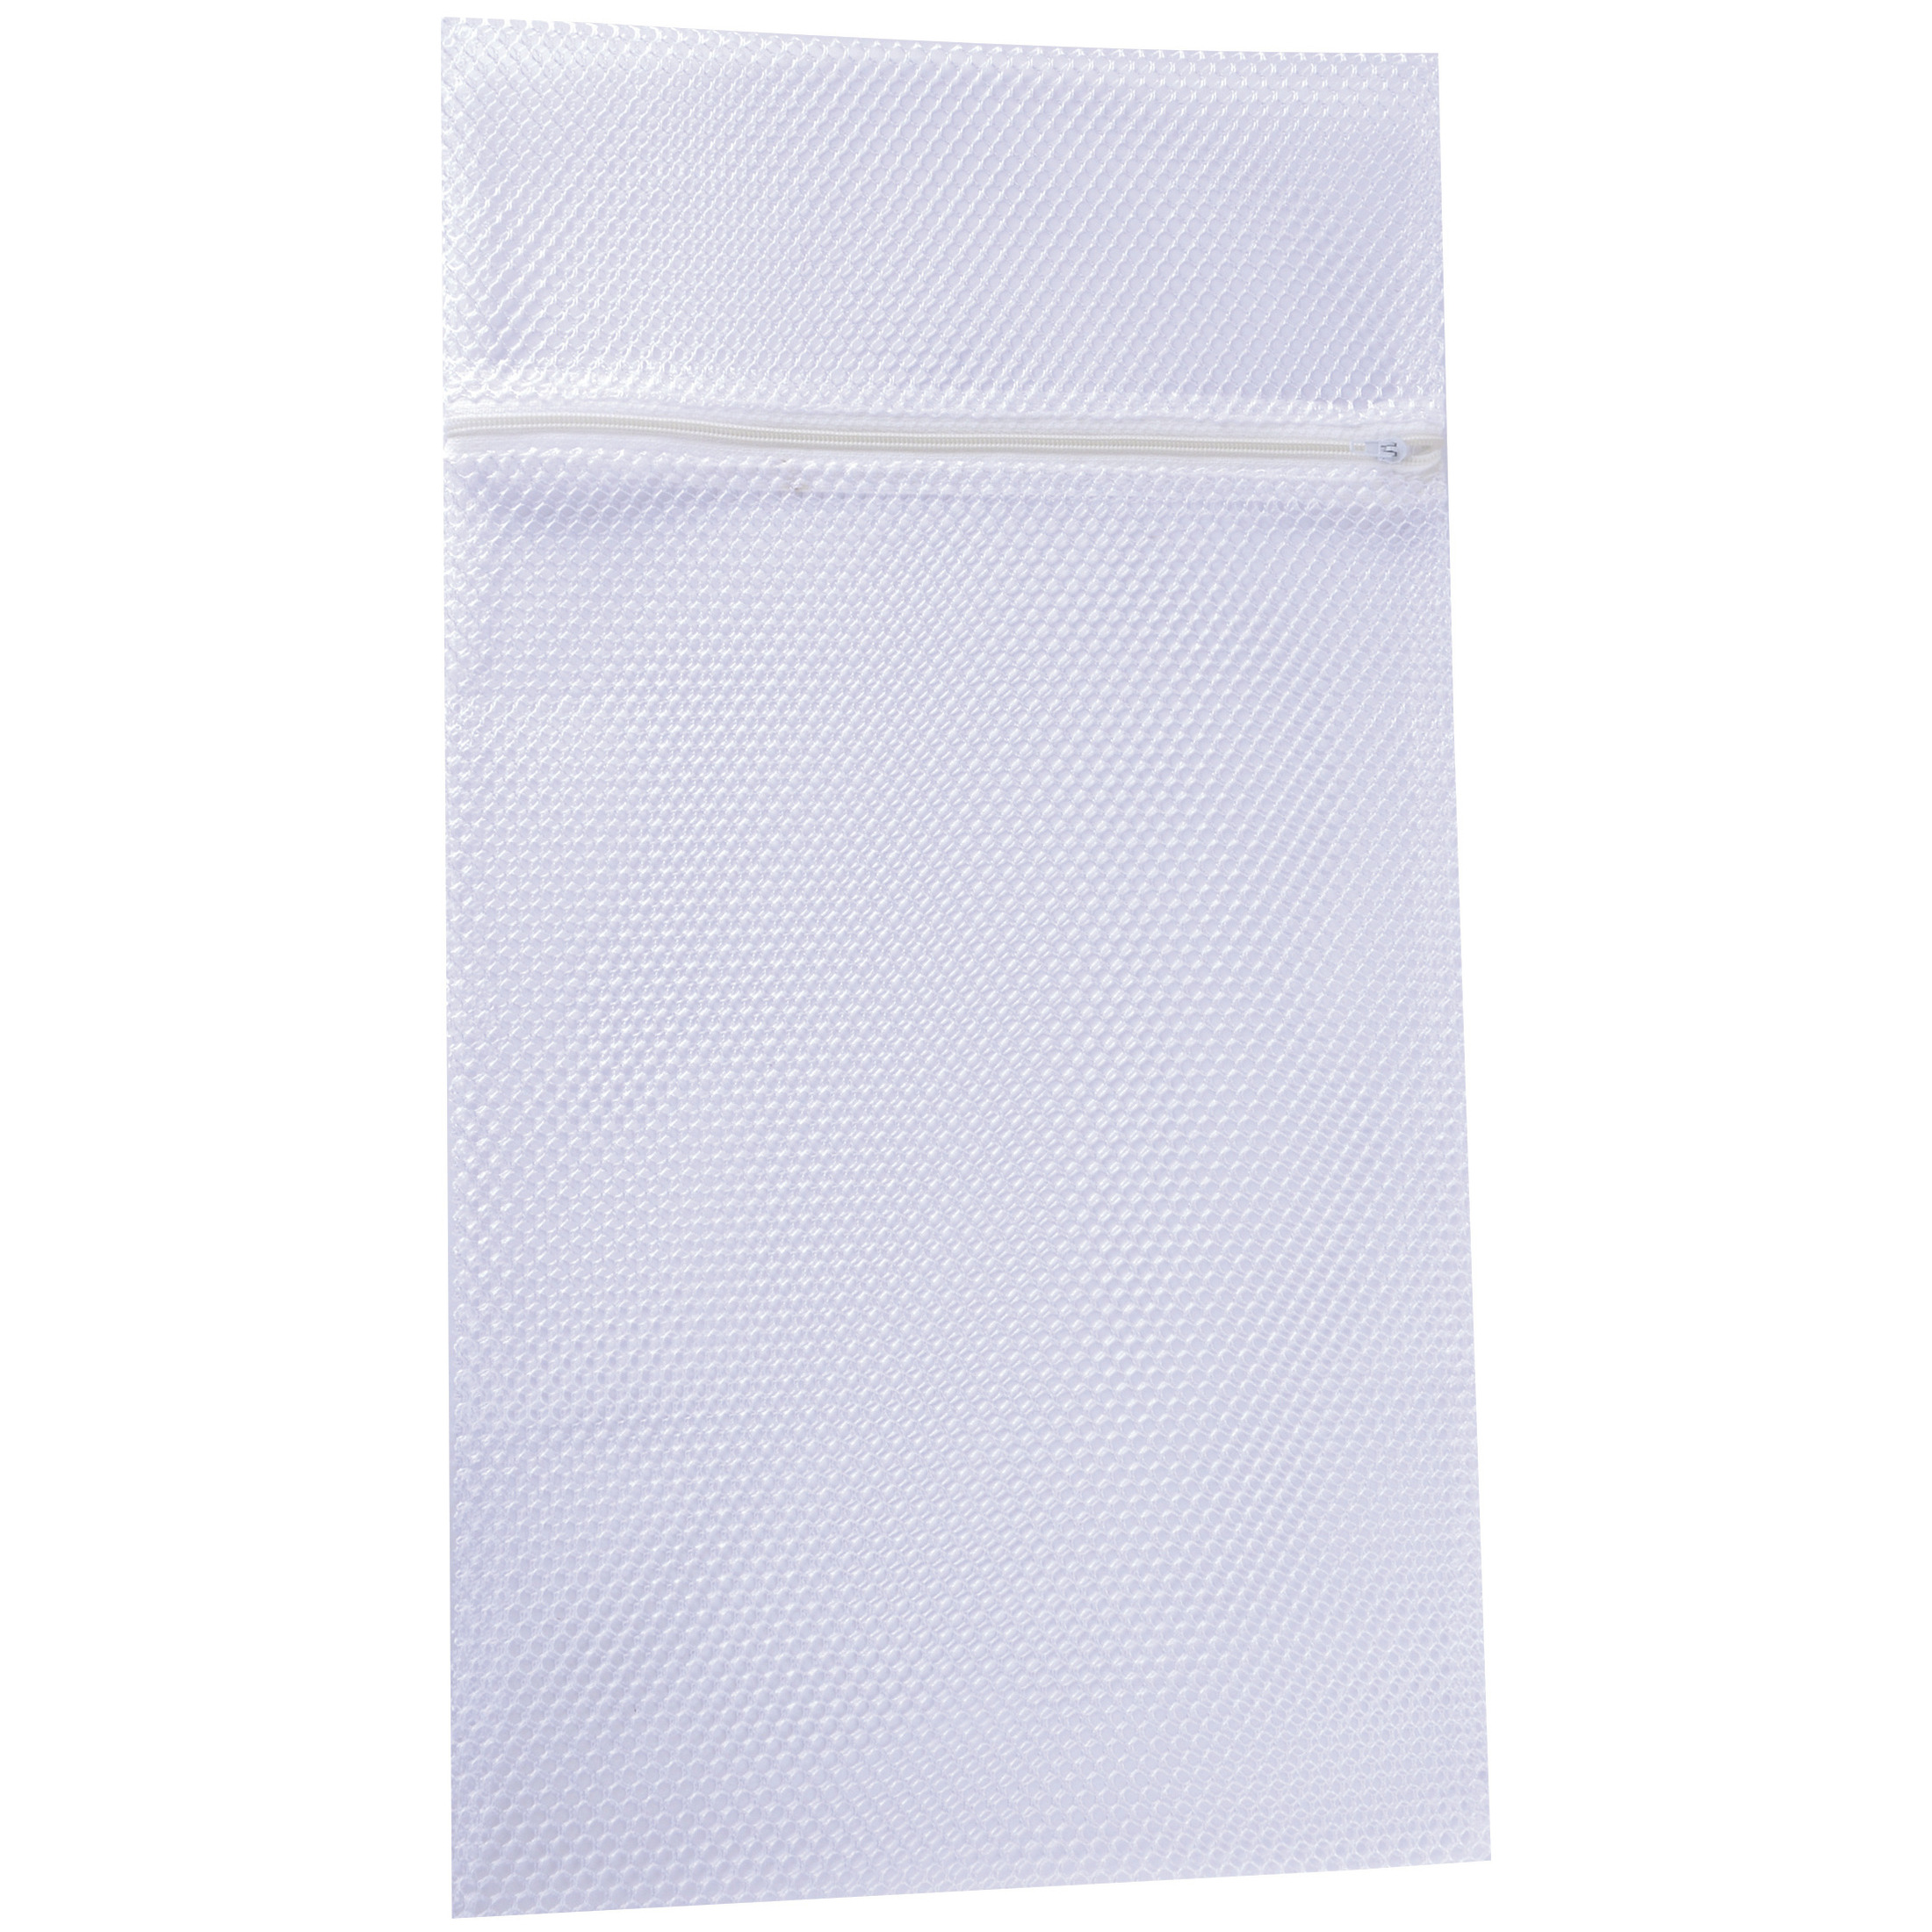 MSV Waszak voor kwetsbare kleding wasgoed/waszak - wit - XL size - 60 x 90 cm